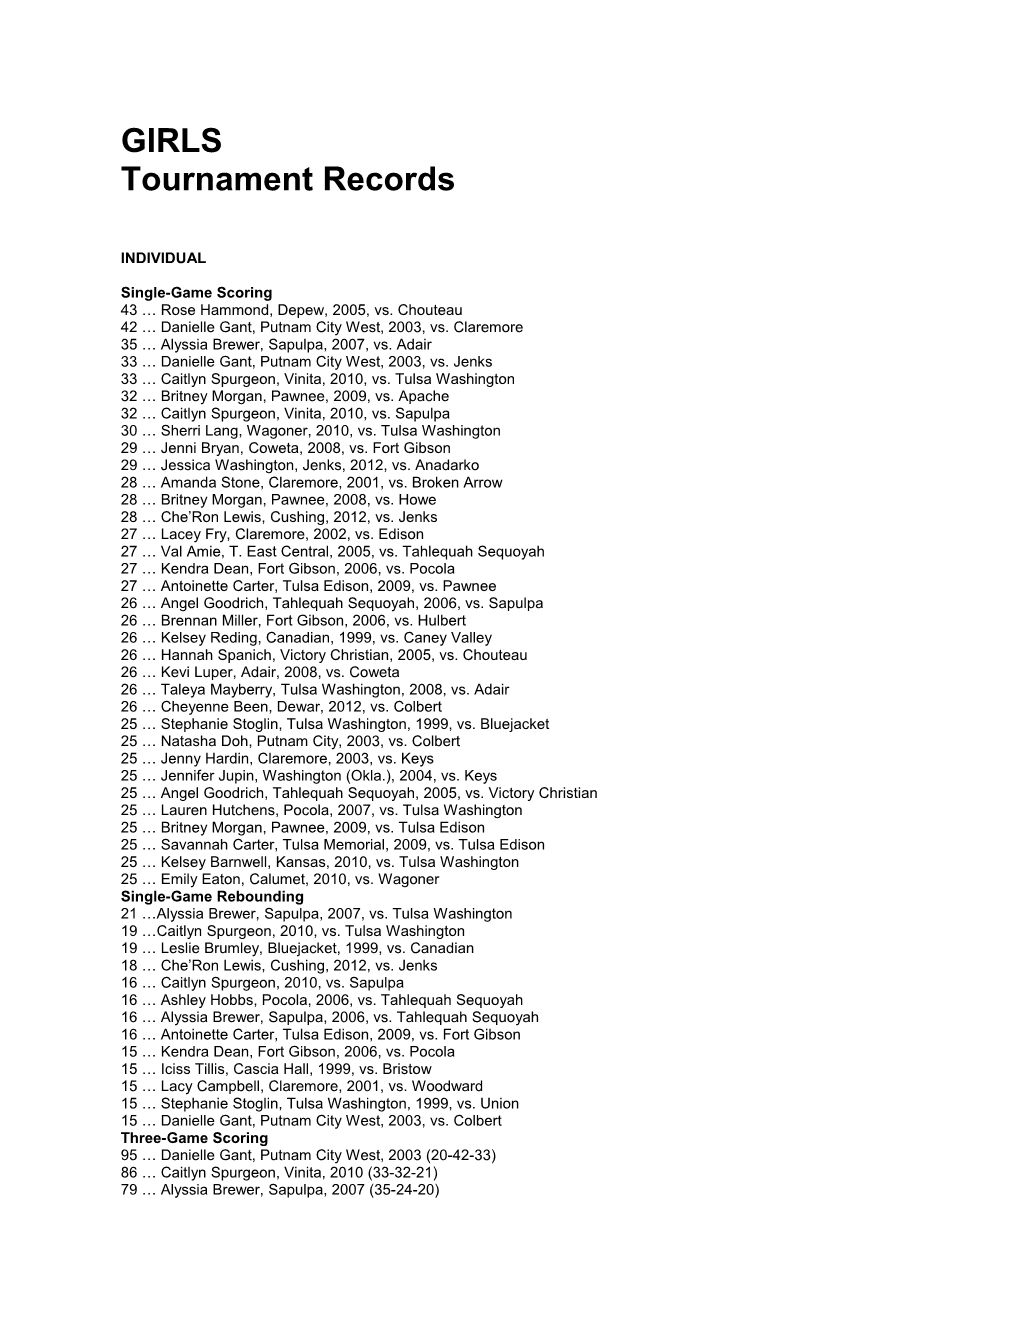 Tournament Records